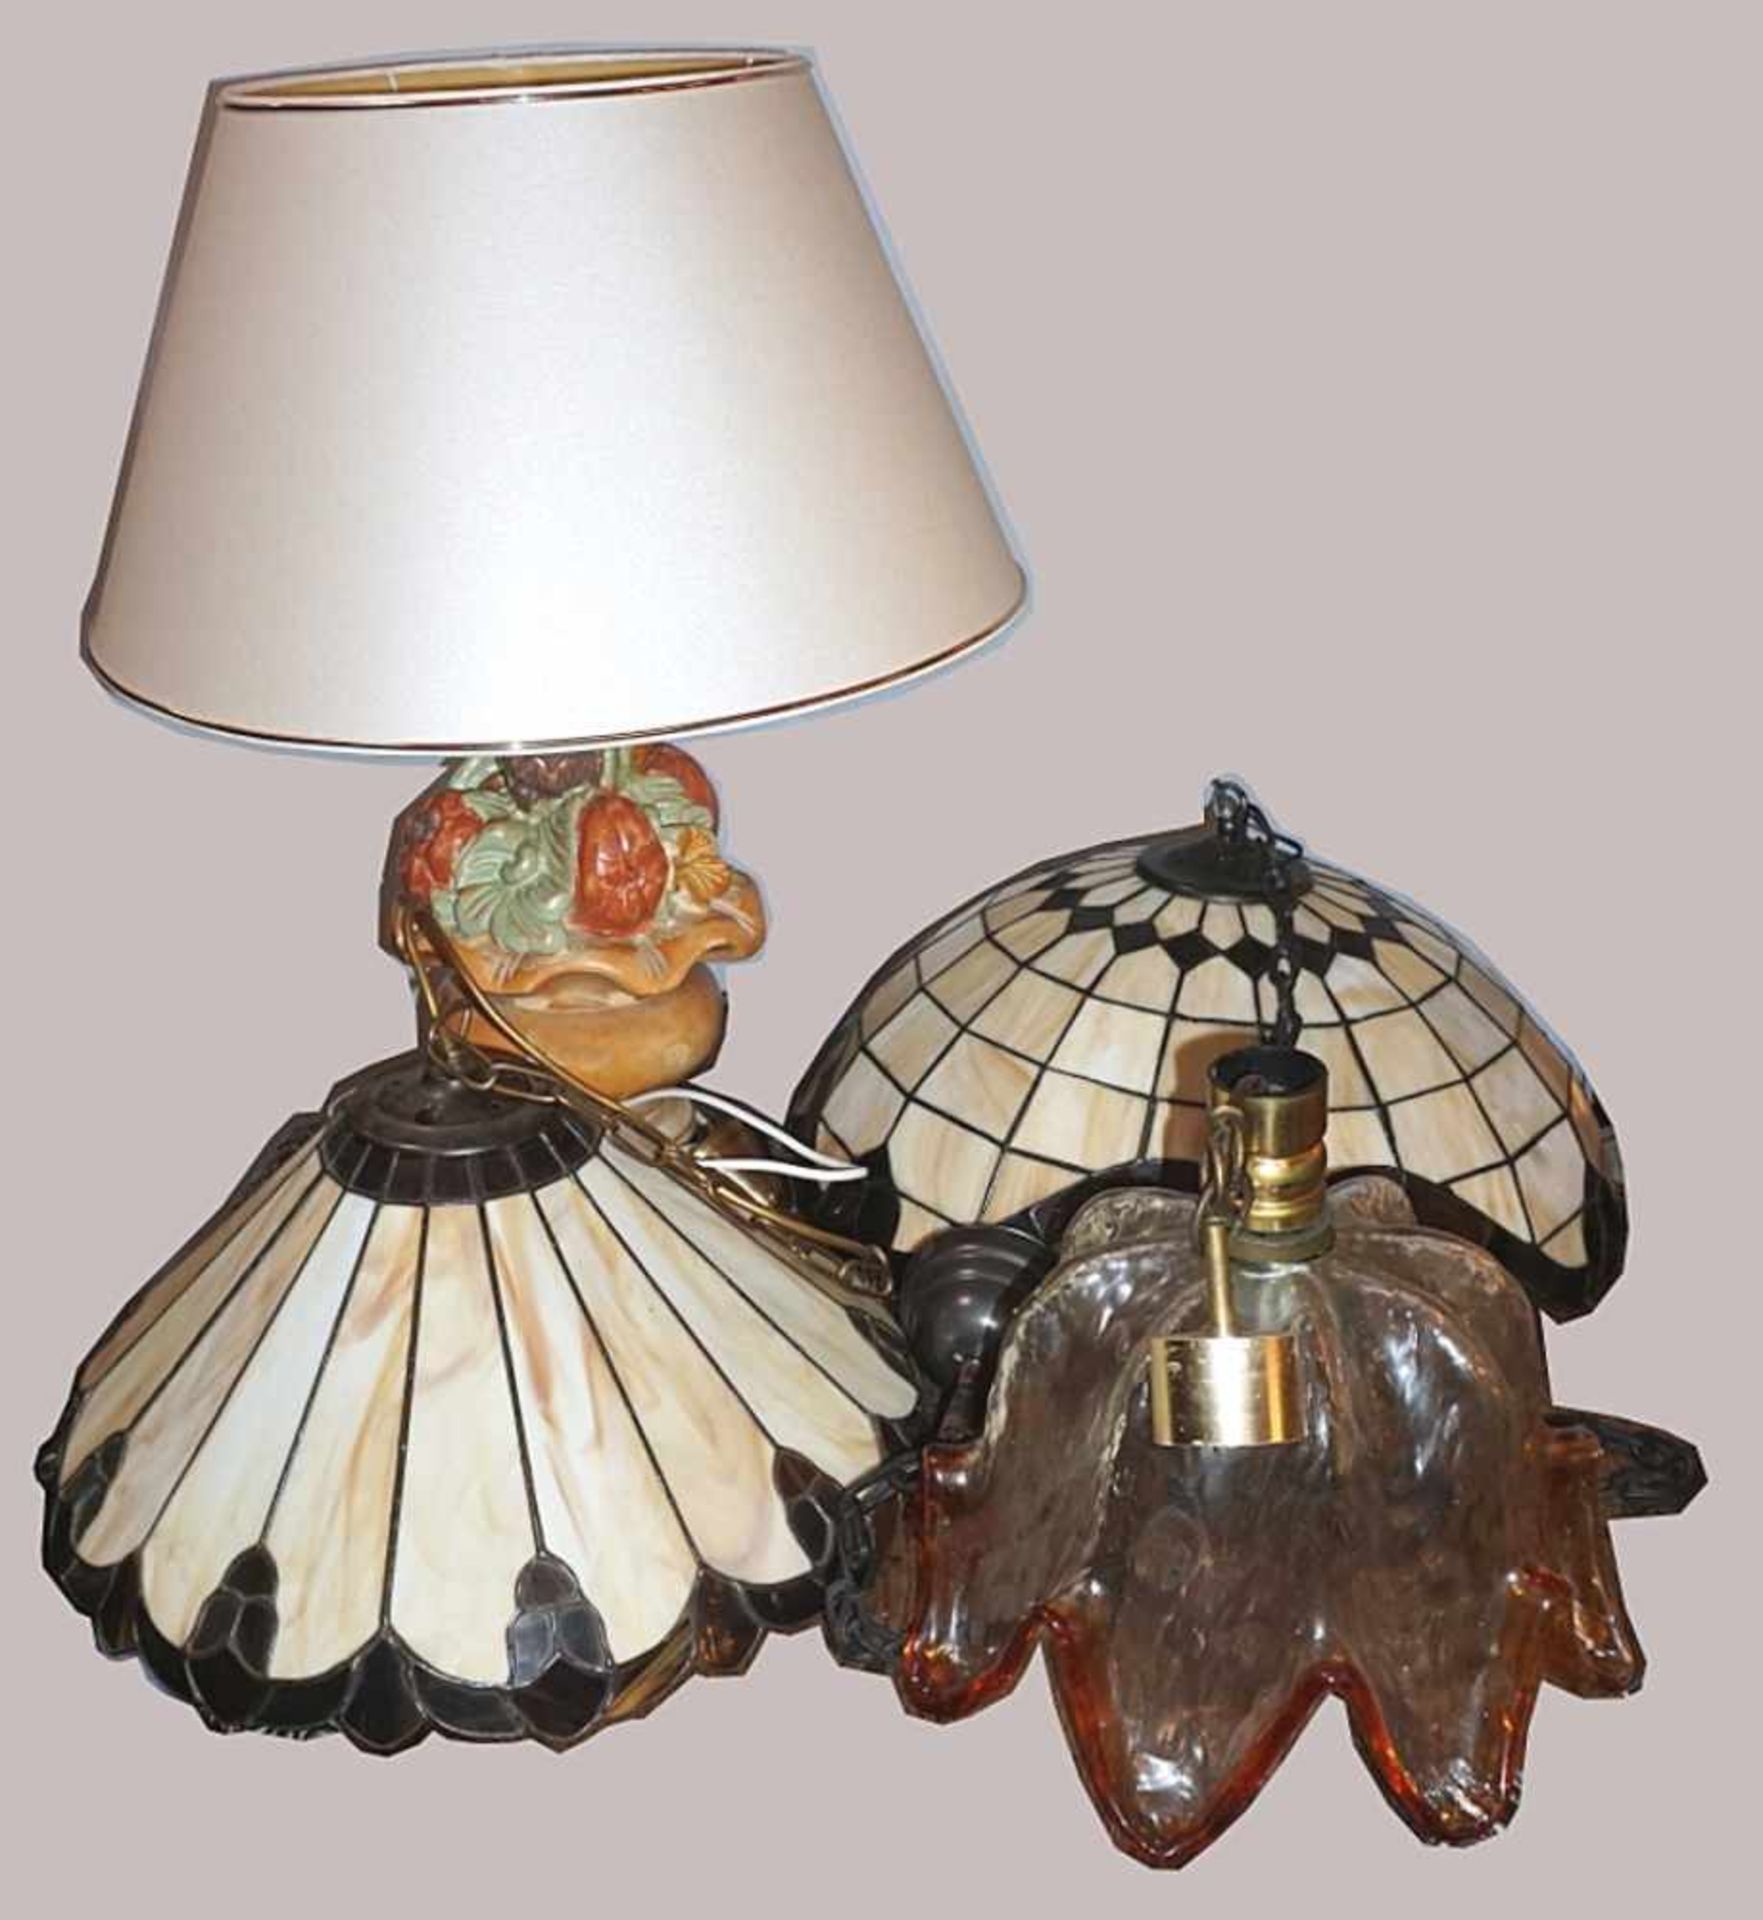 1 Tischlampe Schaft Holz beschnitzt in Obstkorbform H ca. 68cmsowie 1 Konv. Buntglaslampen/